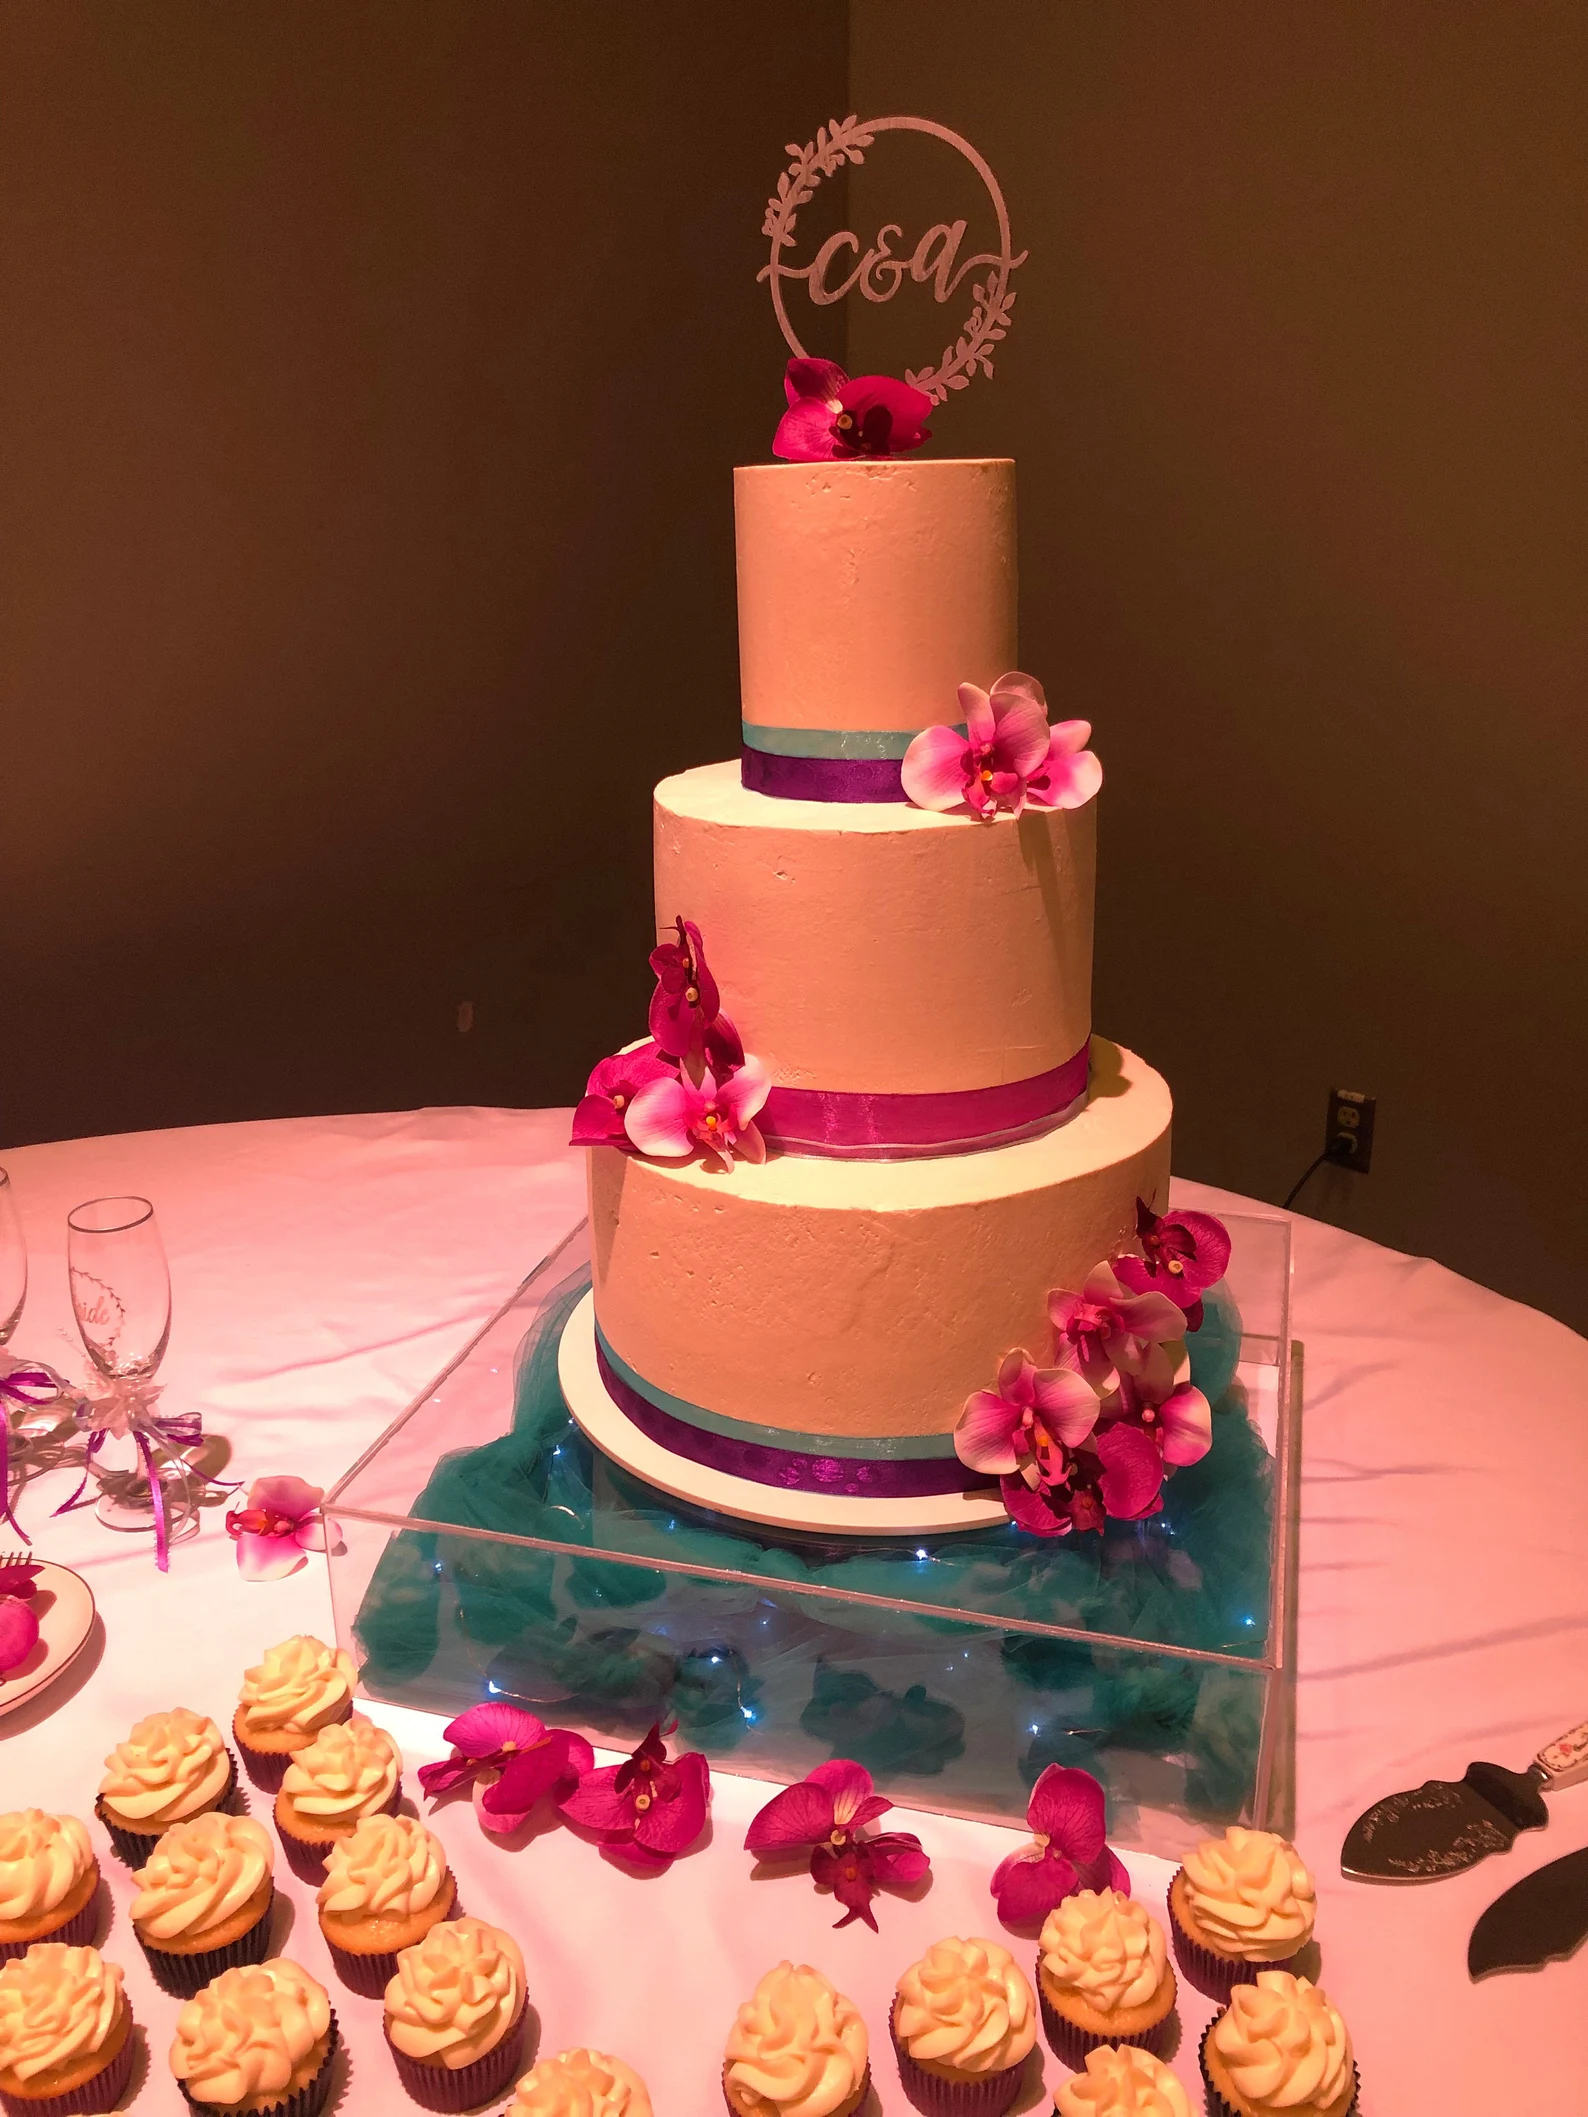 Cake Riser Clear - Clear Cake Stand - Cake Pedestal Acrylic - Acrylic Wedding Cake Riser